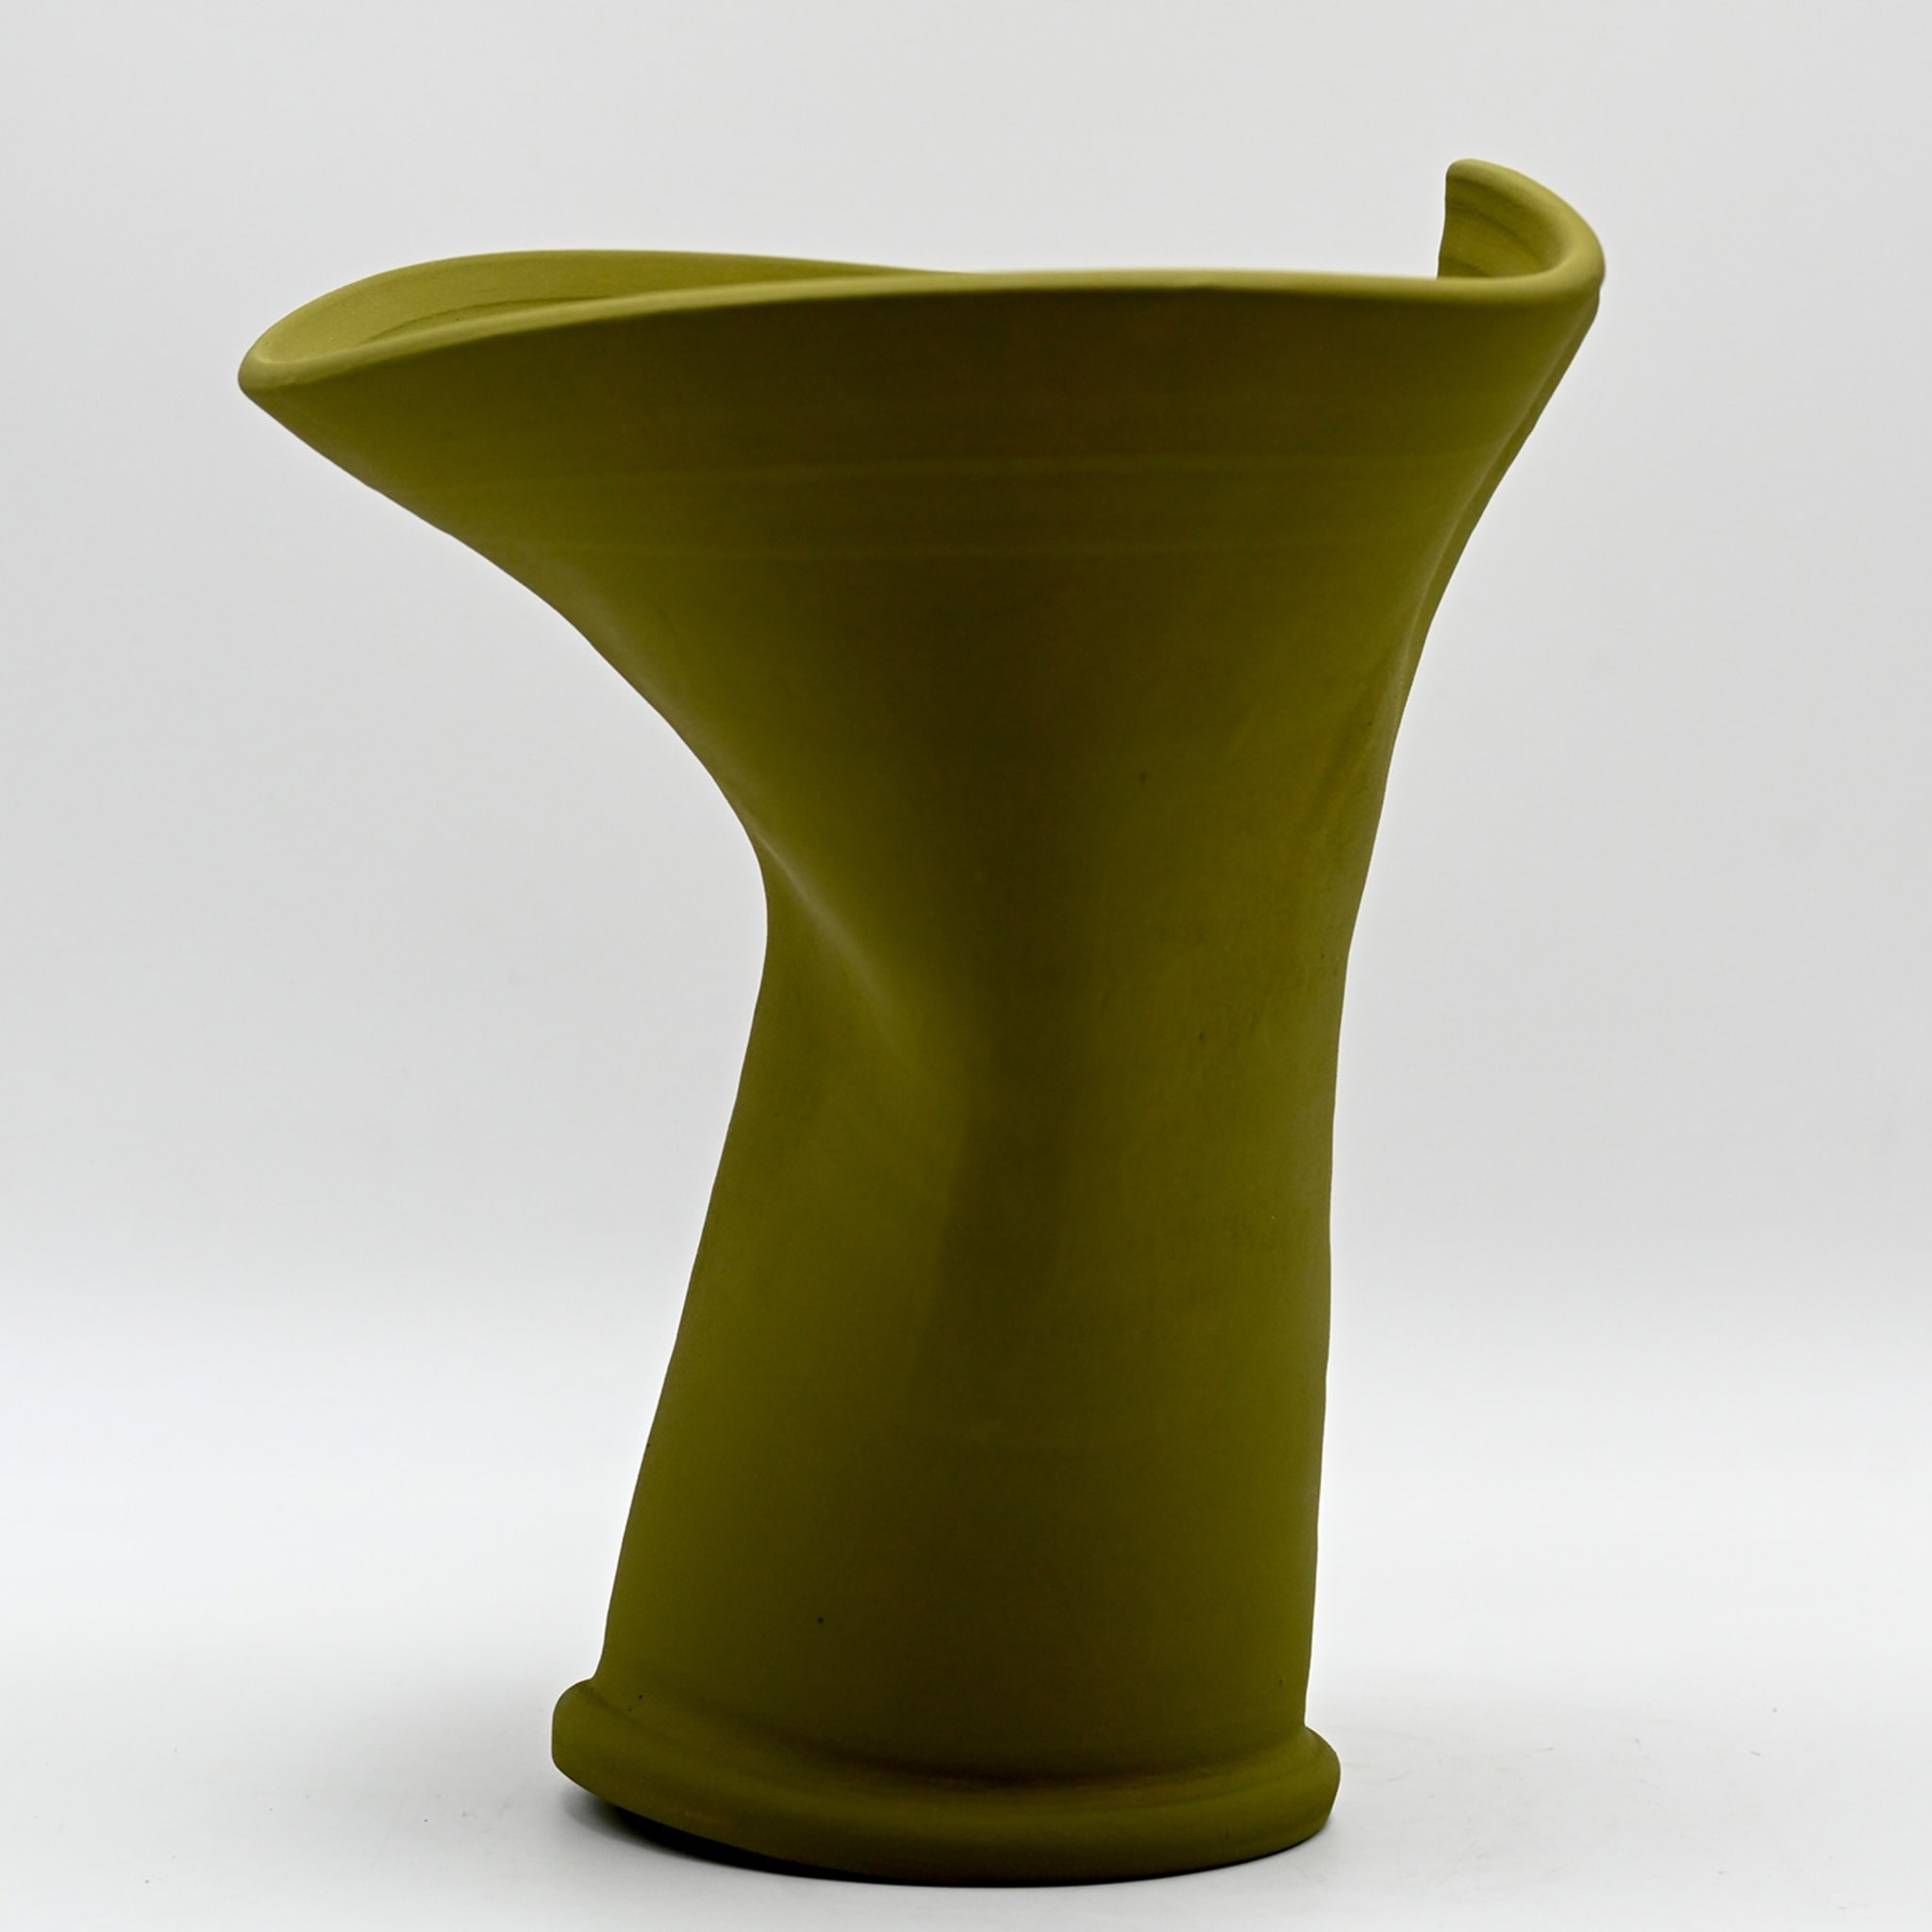 Green Vase #5 - Alternative view 1